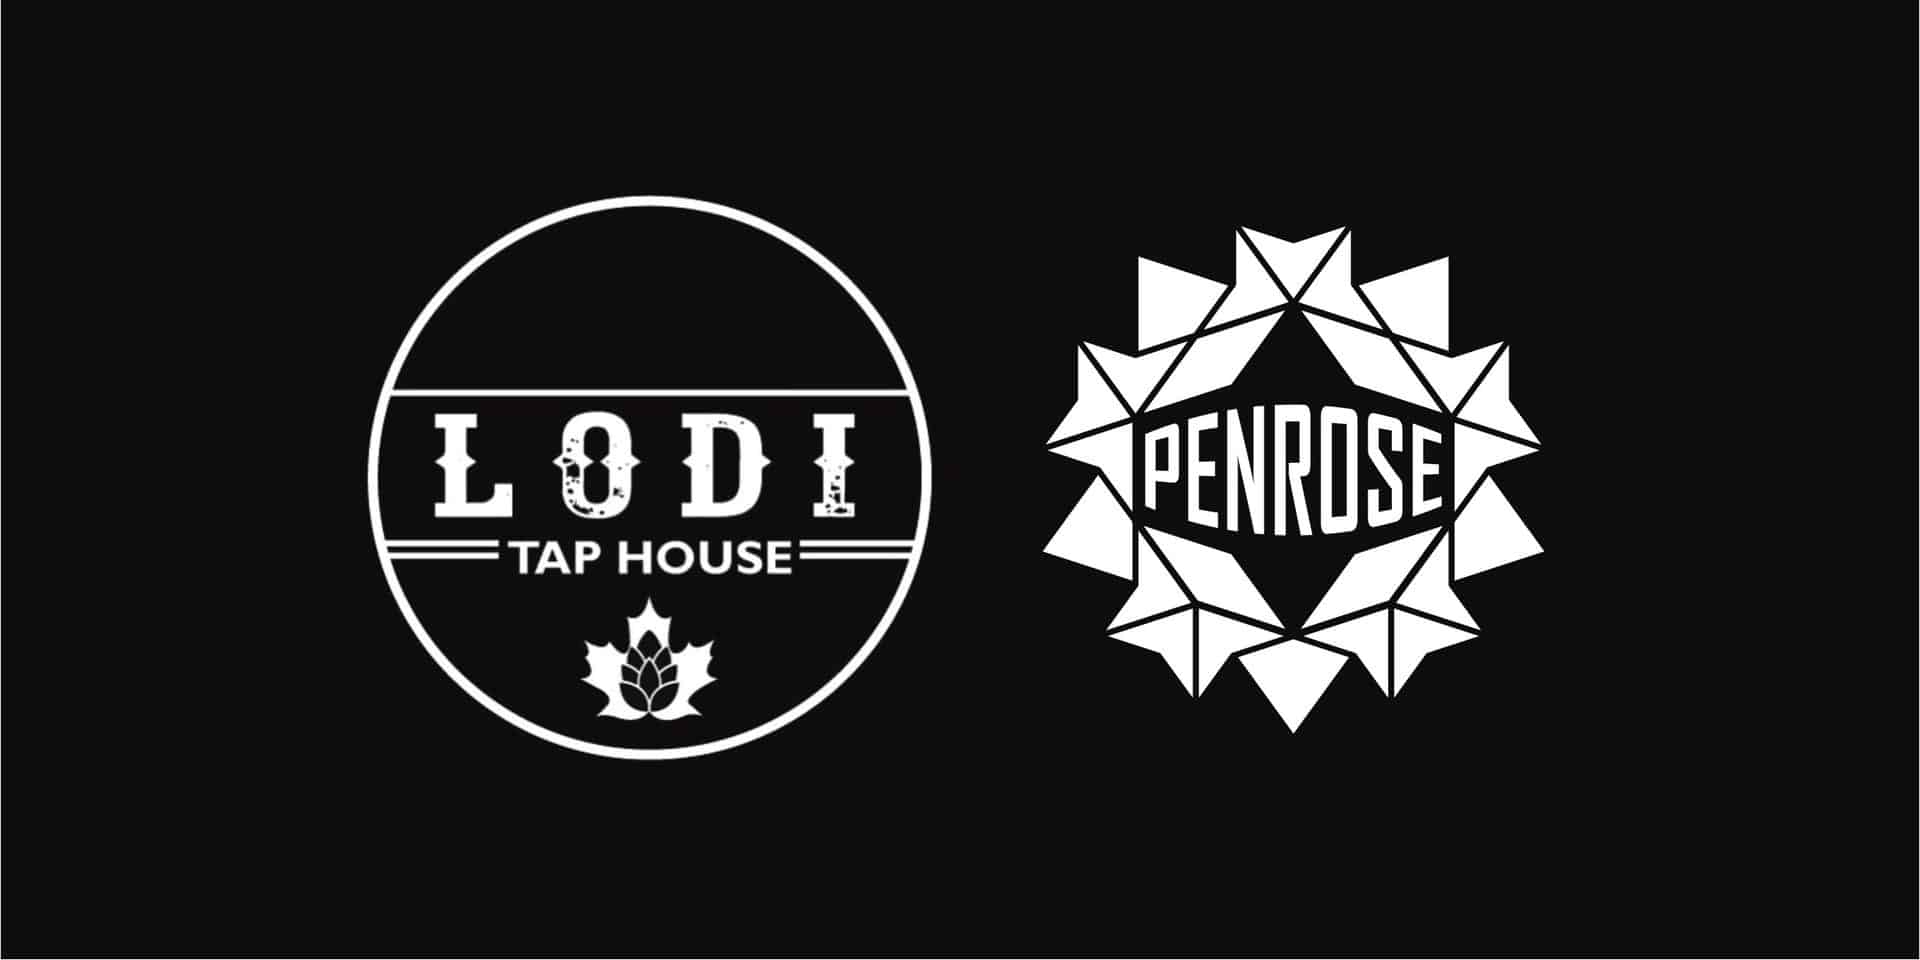 Lodi Tap House Penrose Brewing Company